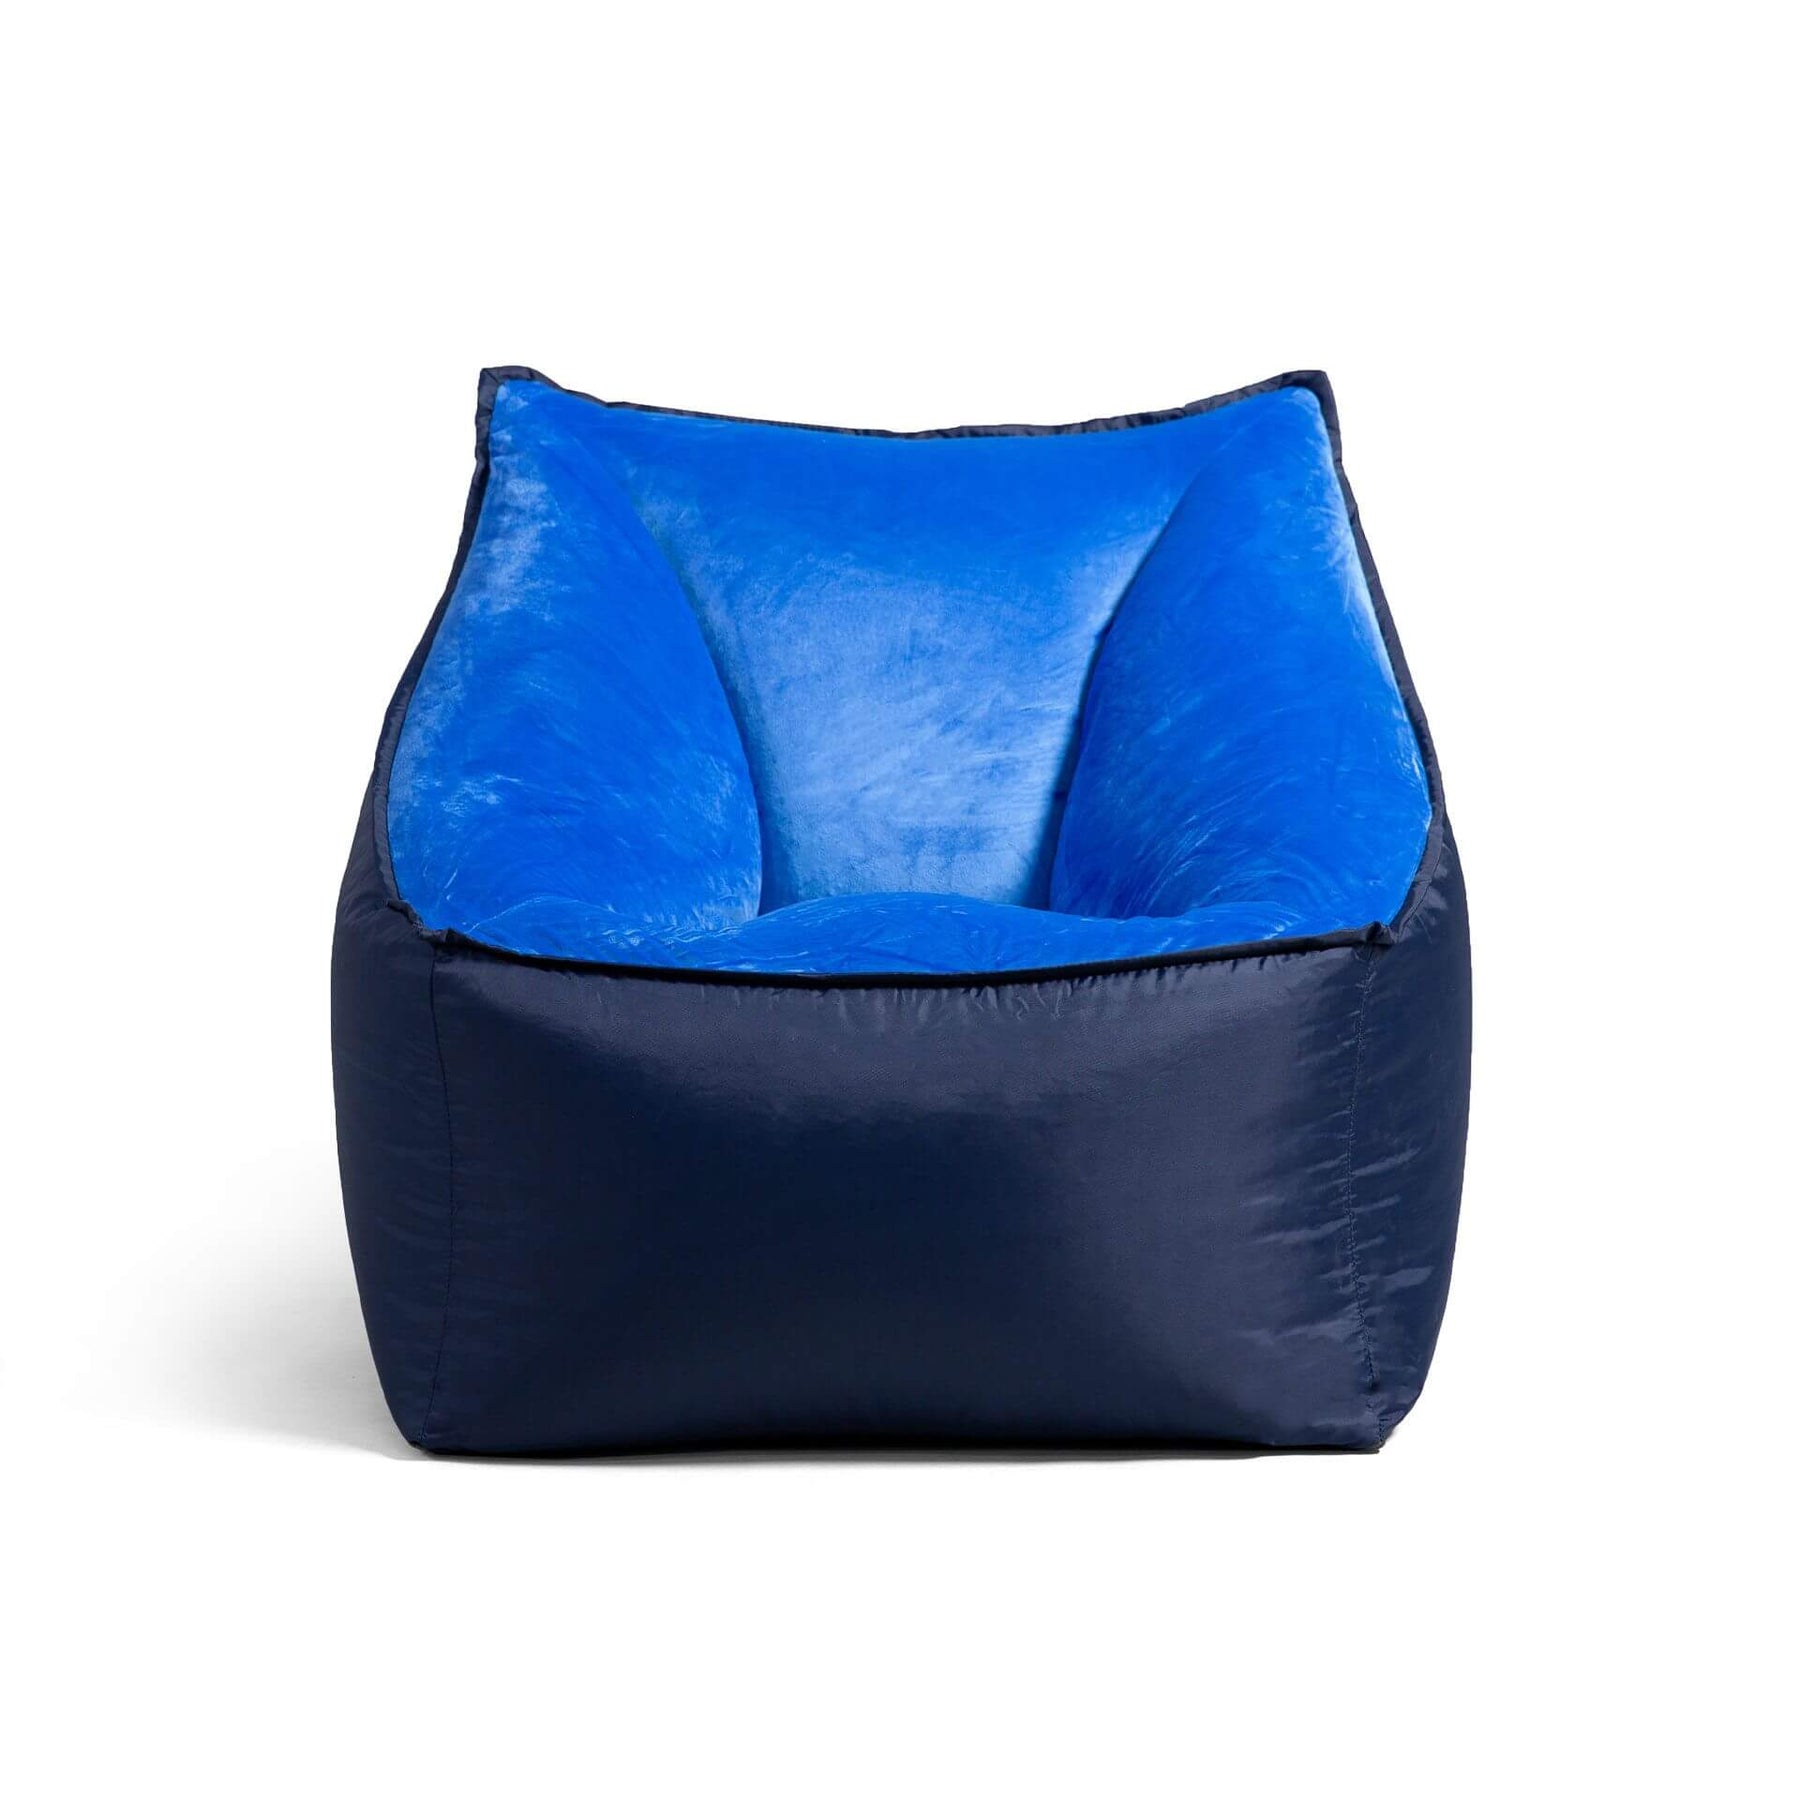 Big Joe Slalom Bean Bag Chair - Blue - Medium